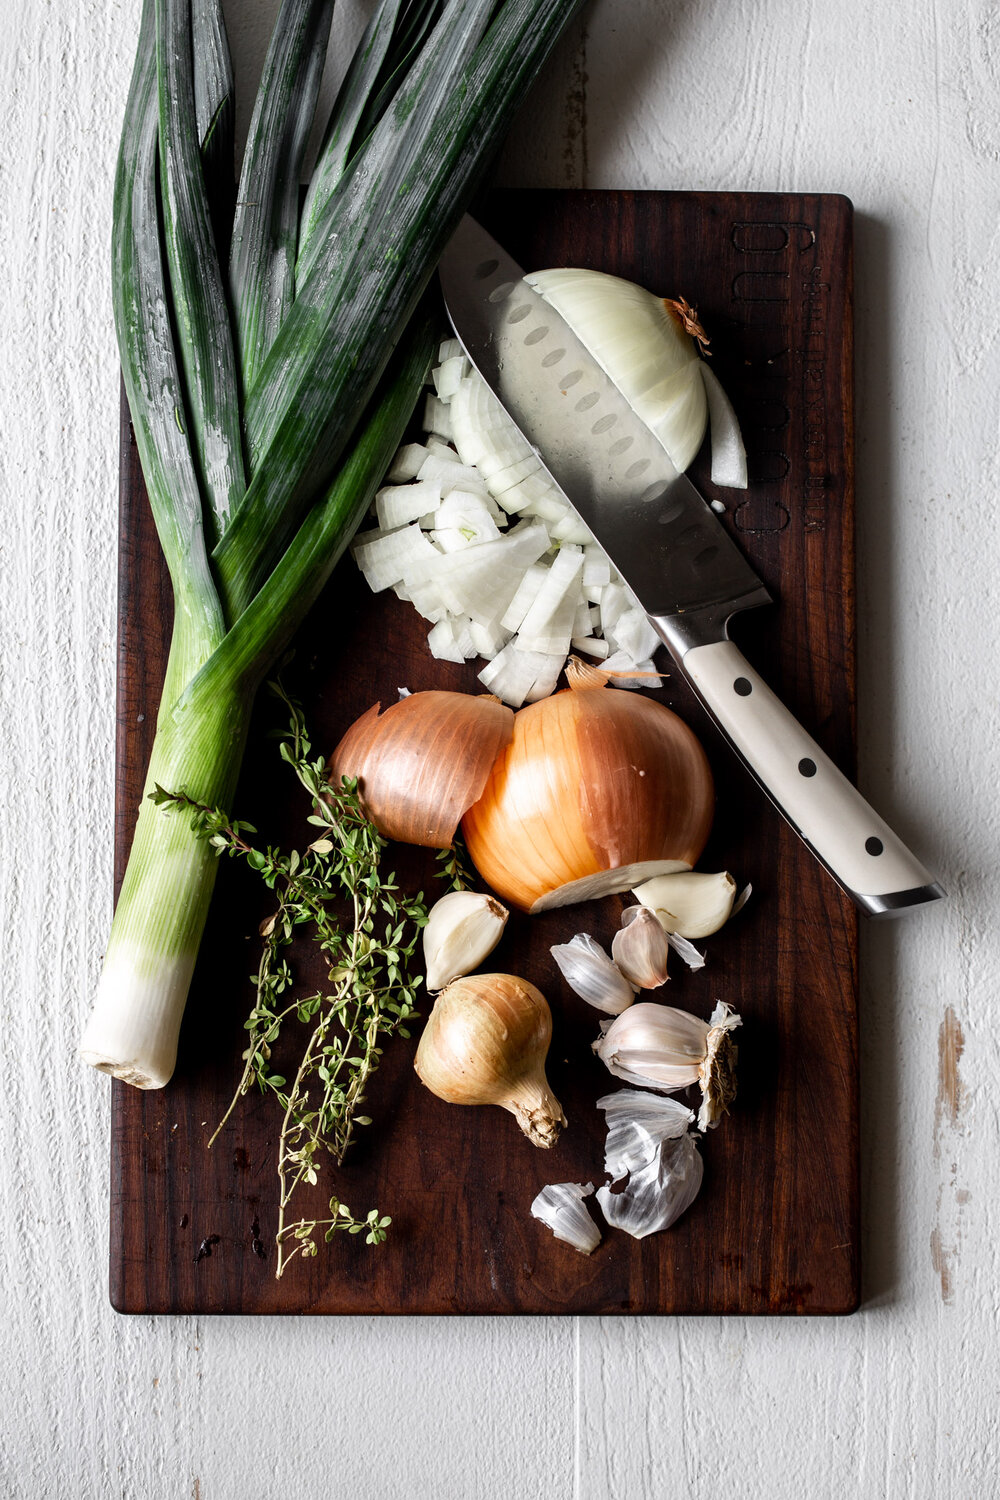 diced onion leeks and garlic